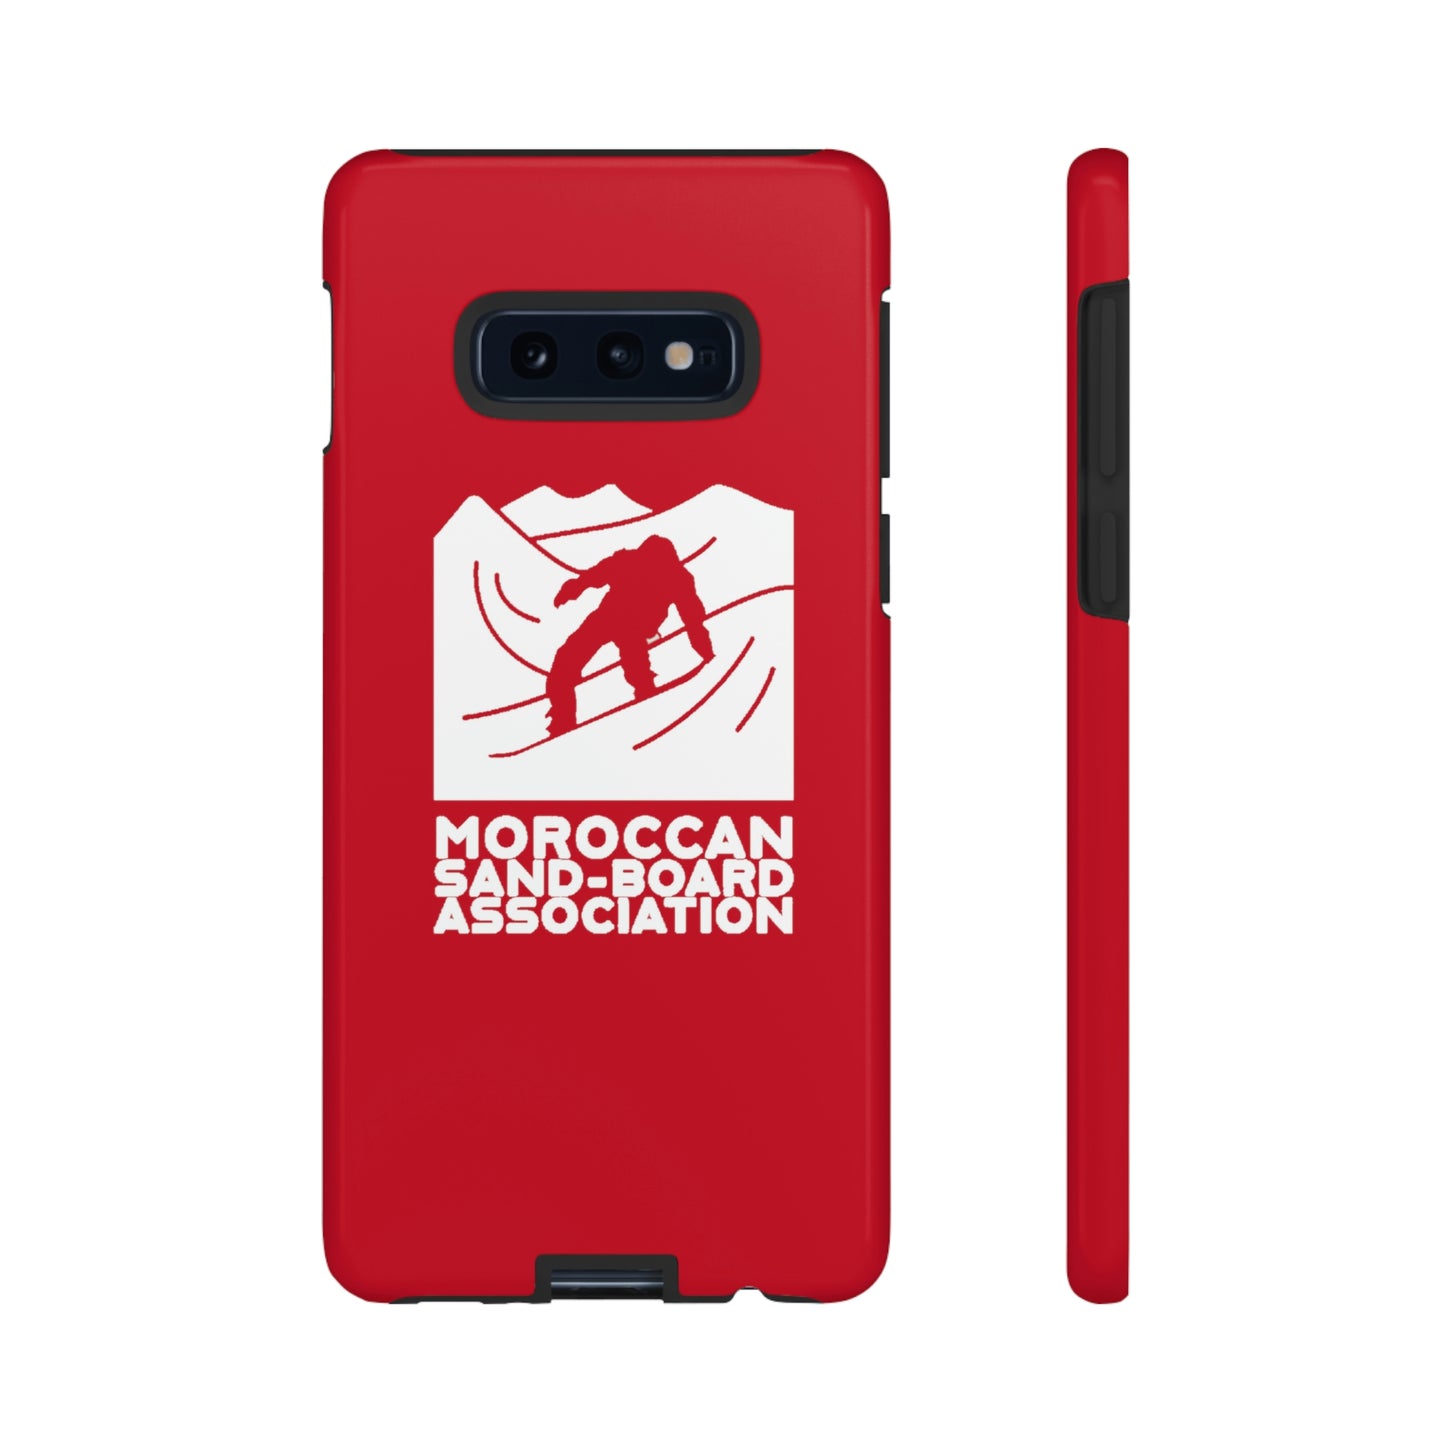 Moroccan Sandboard Association Phone Case